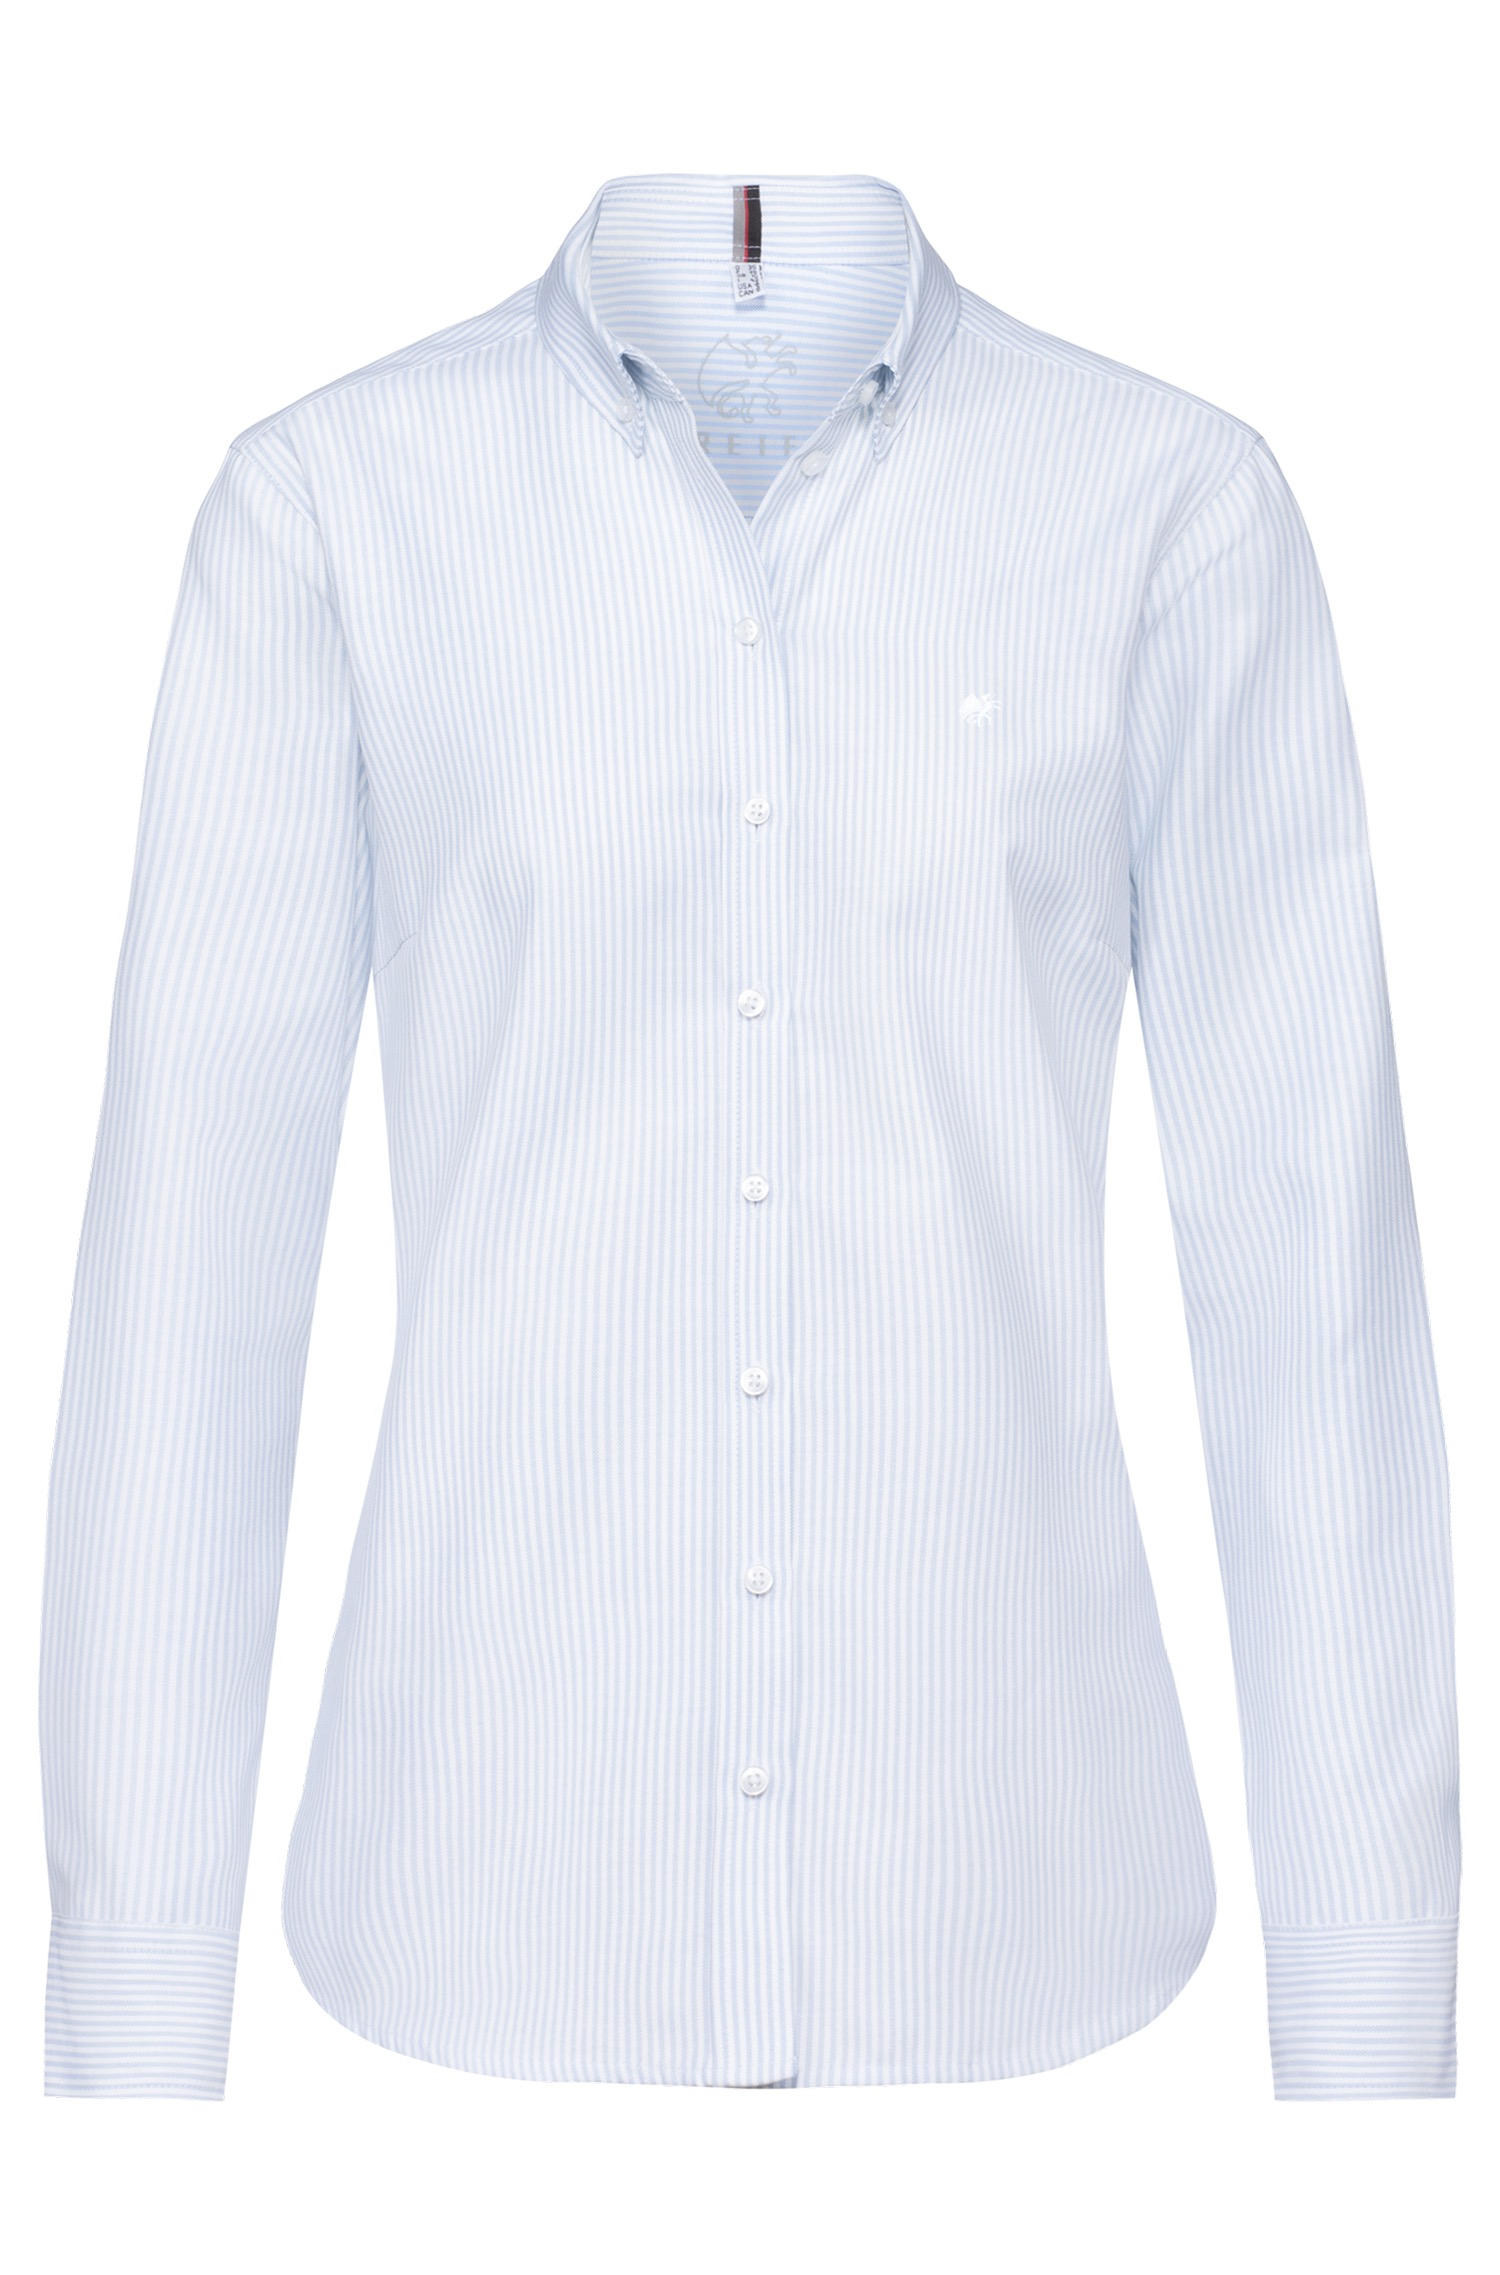 Greiff Corporate Casual Damen-Bluse Regular Fit